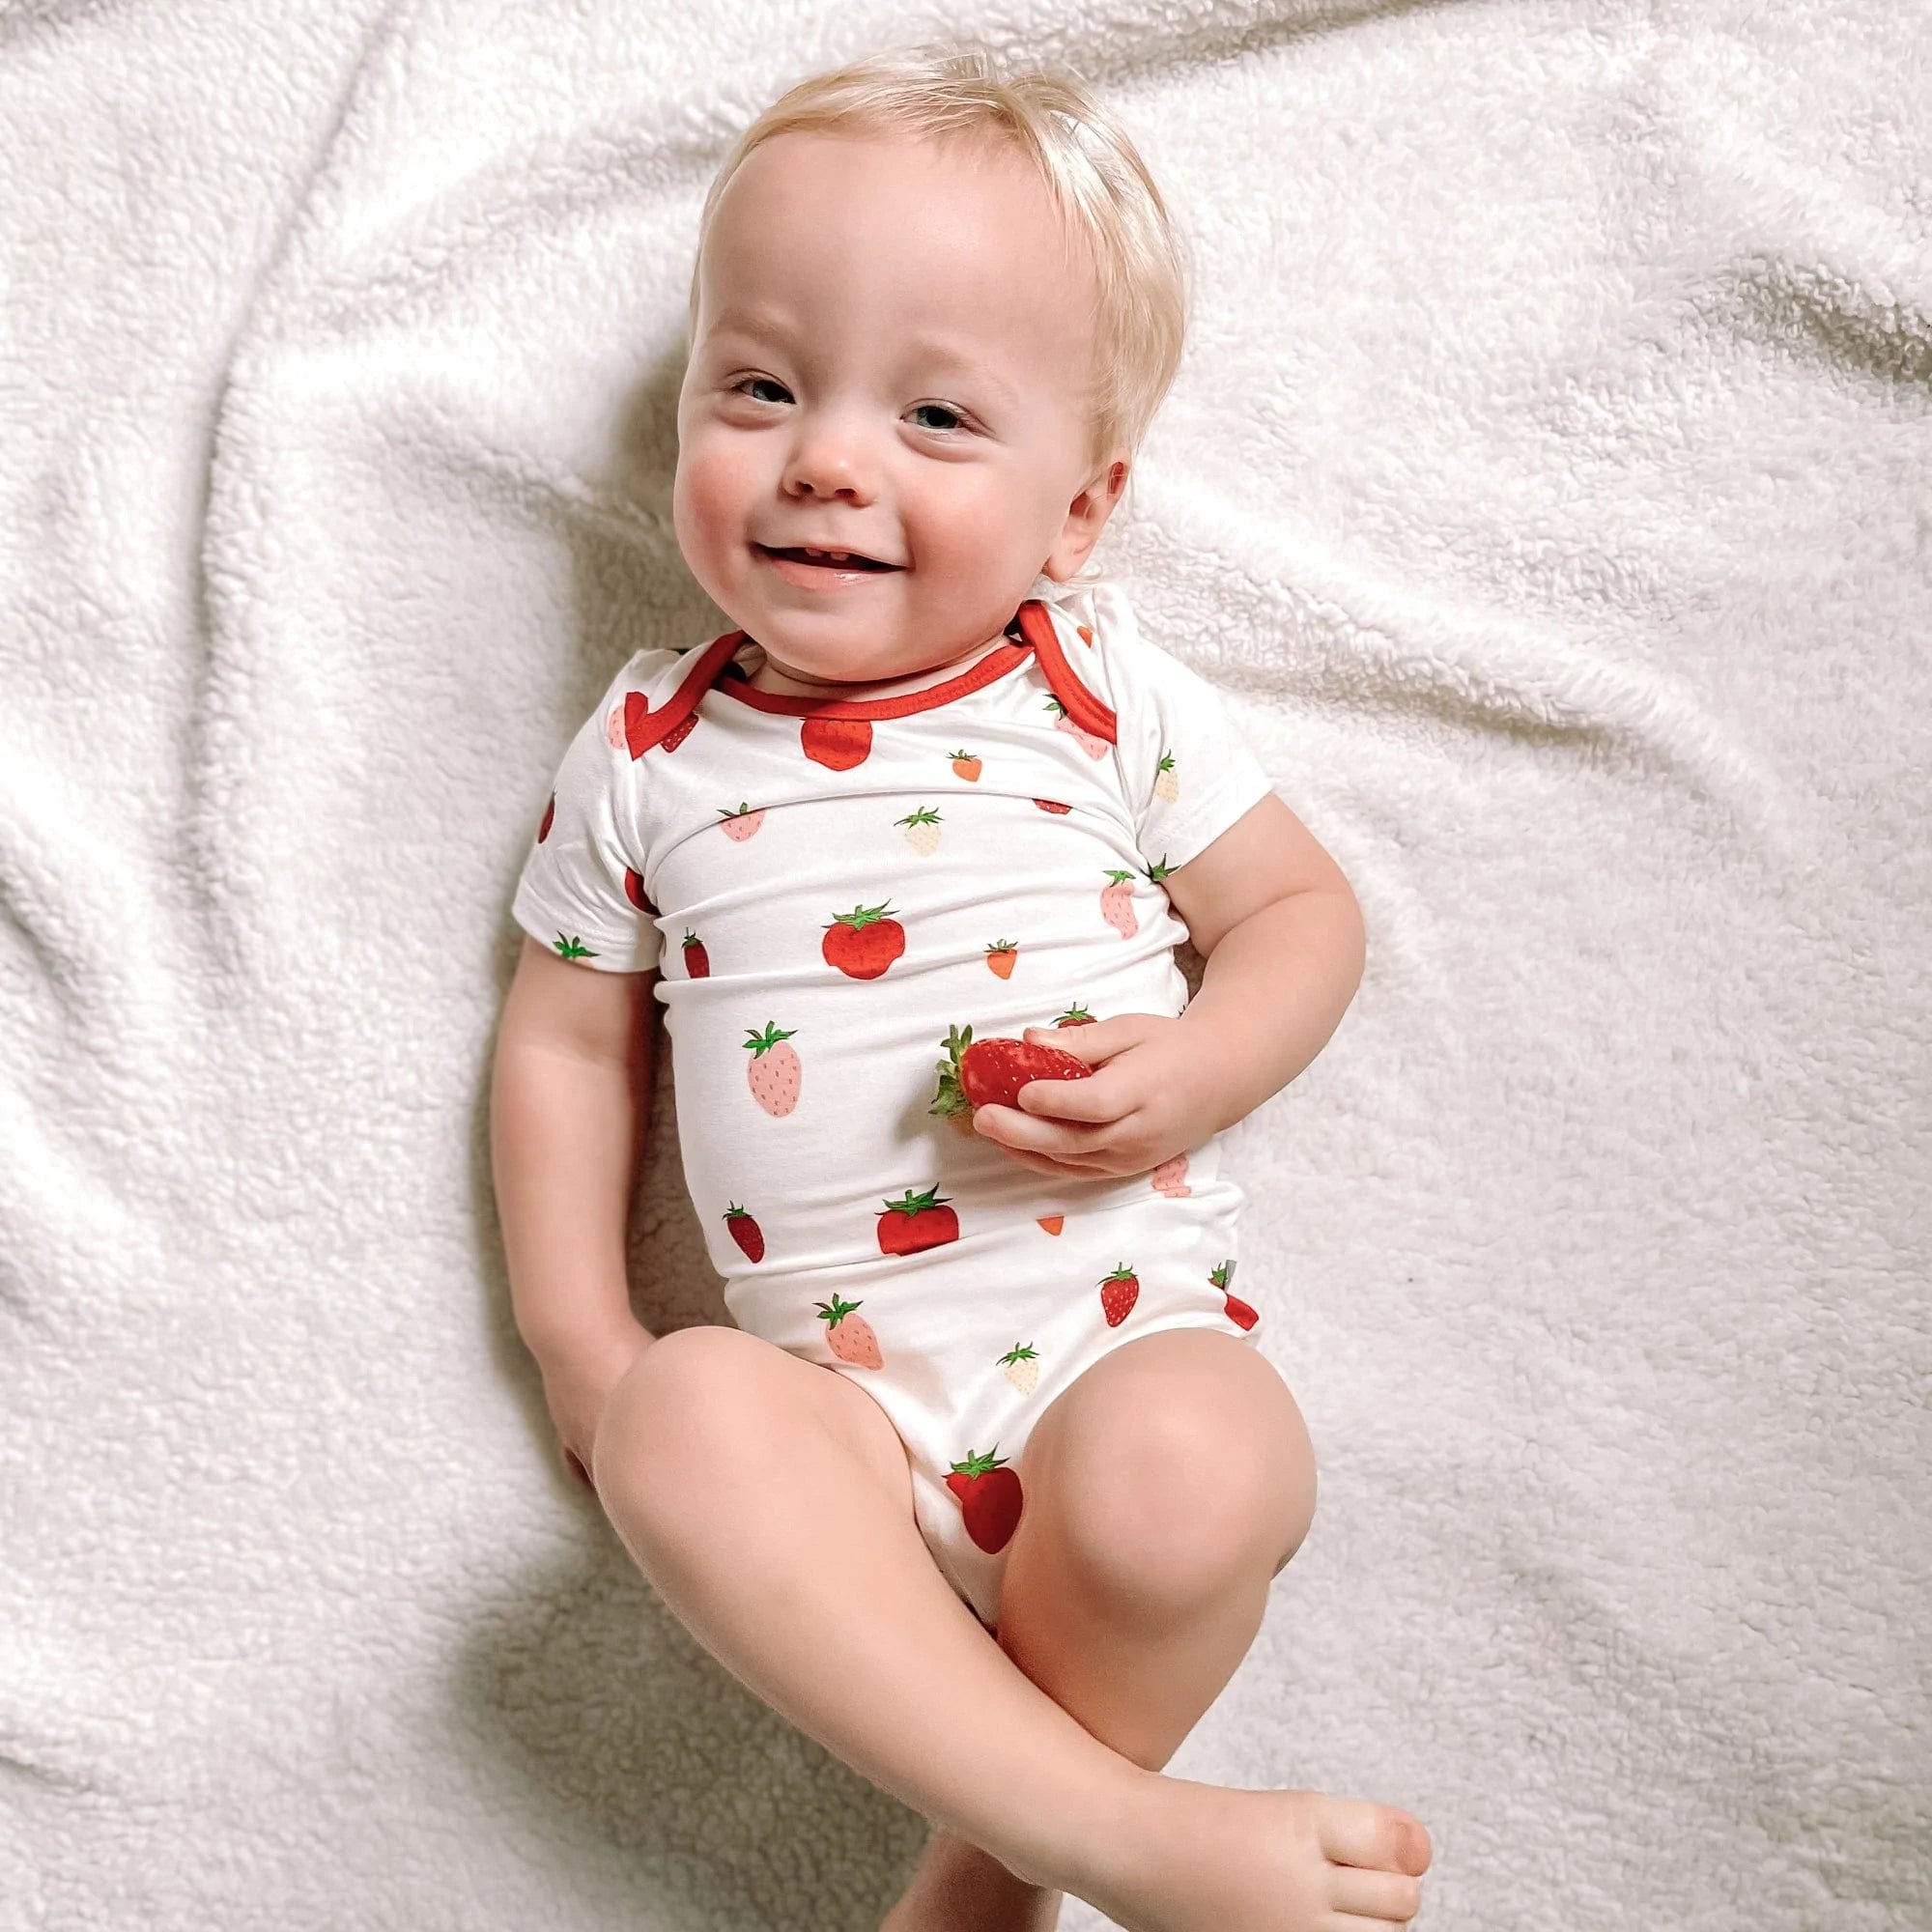 Baby wearing Kyte Baby infant Bodysuit in Strawberry